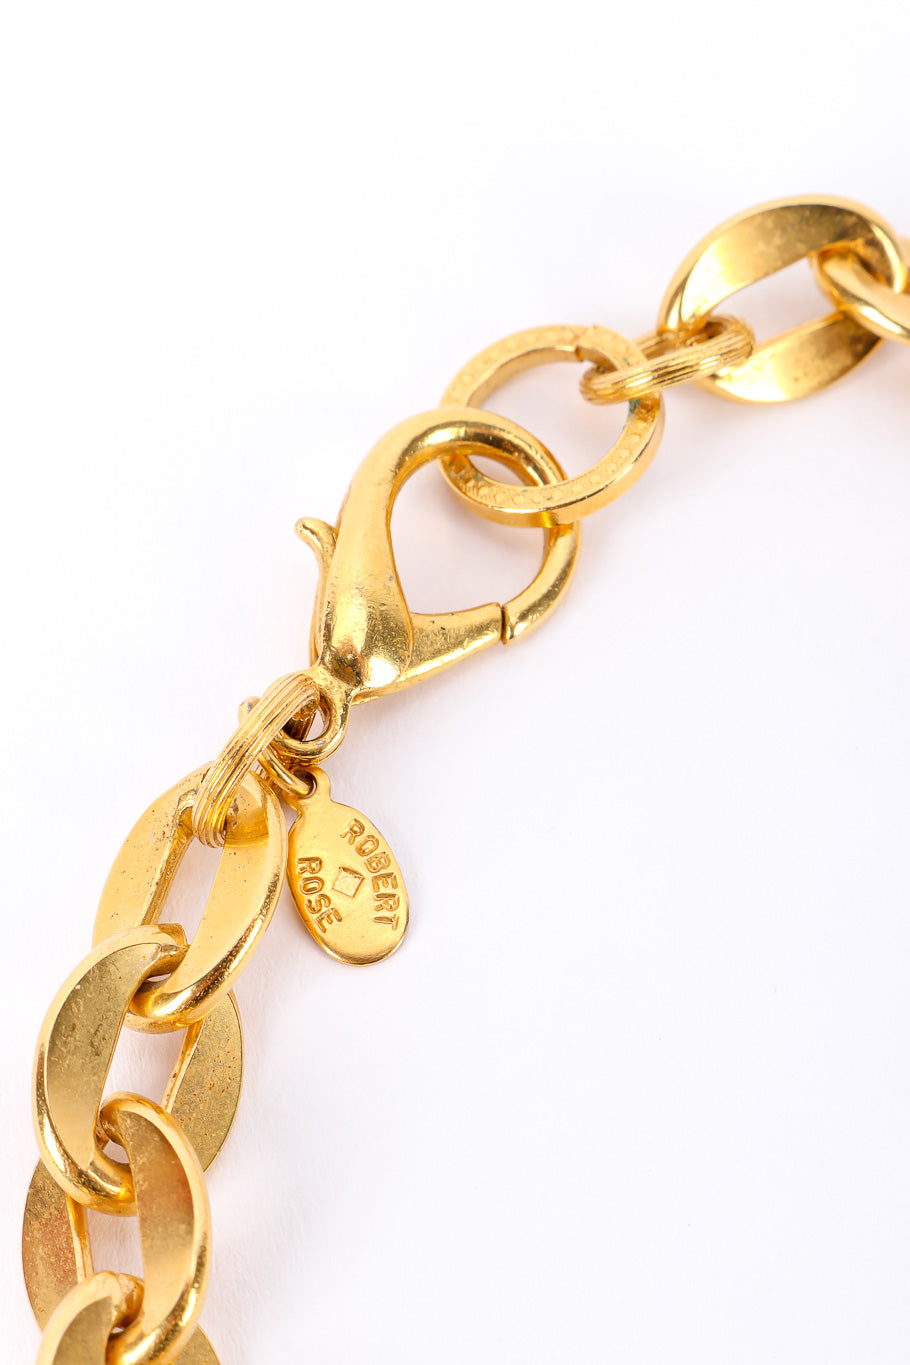 Vintage Robert Rose Byzantine Maltese Cross Necklace spring clasp and signature tag closeup @Recessla